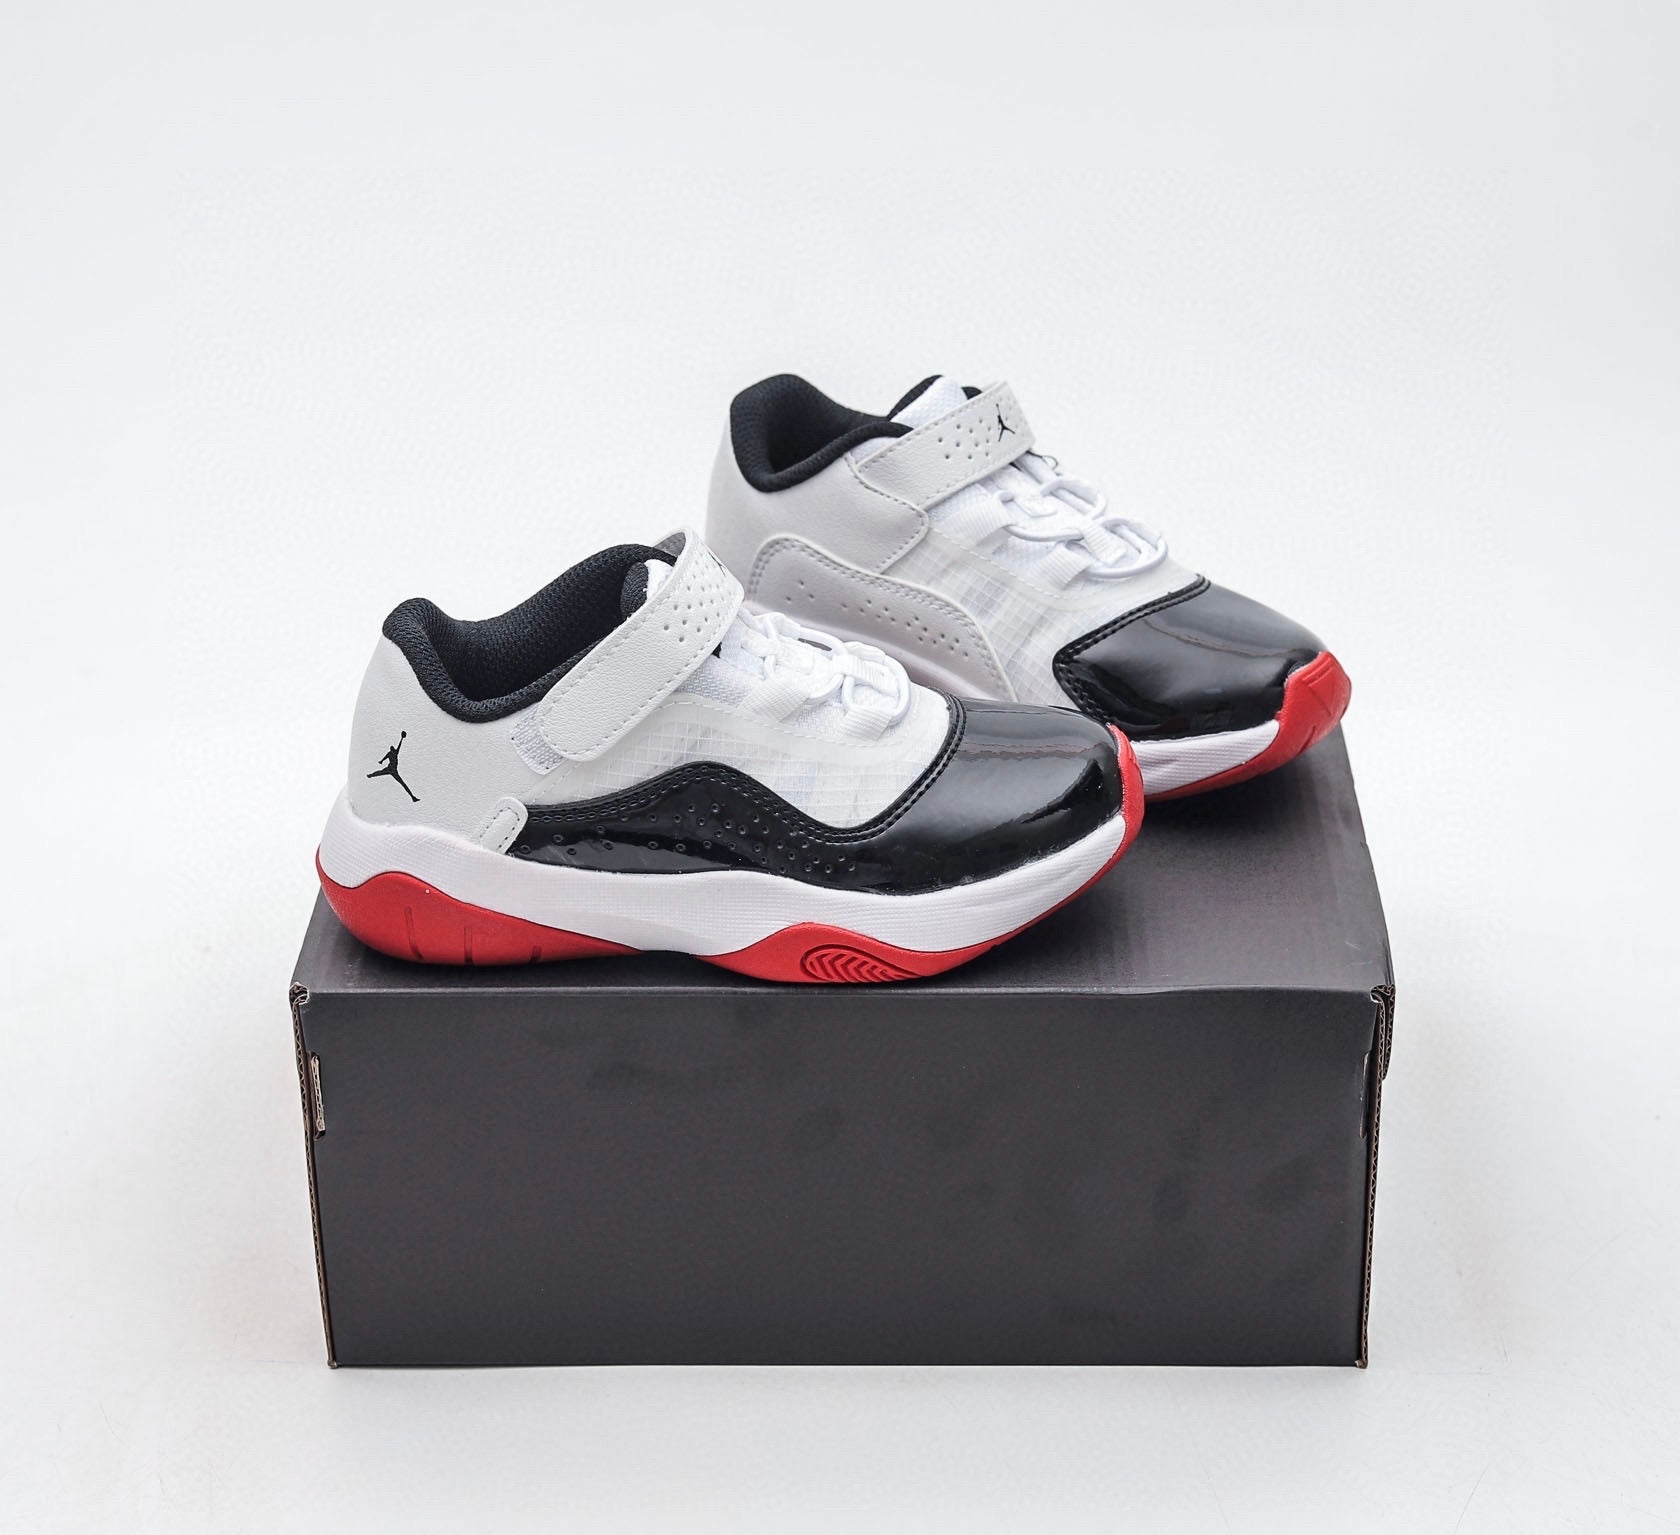 Nike air jordan retro low cut noir/blanc/rouge chaussures